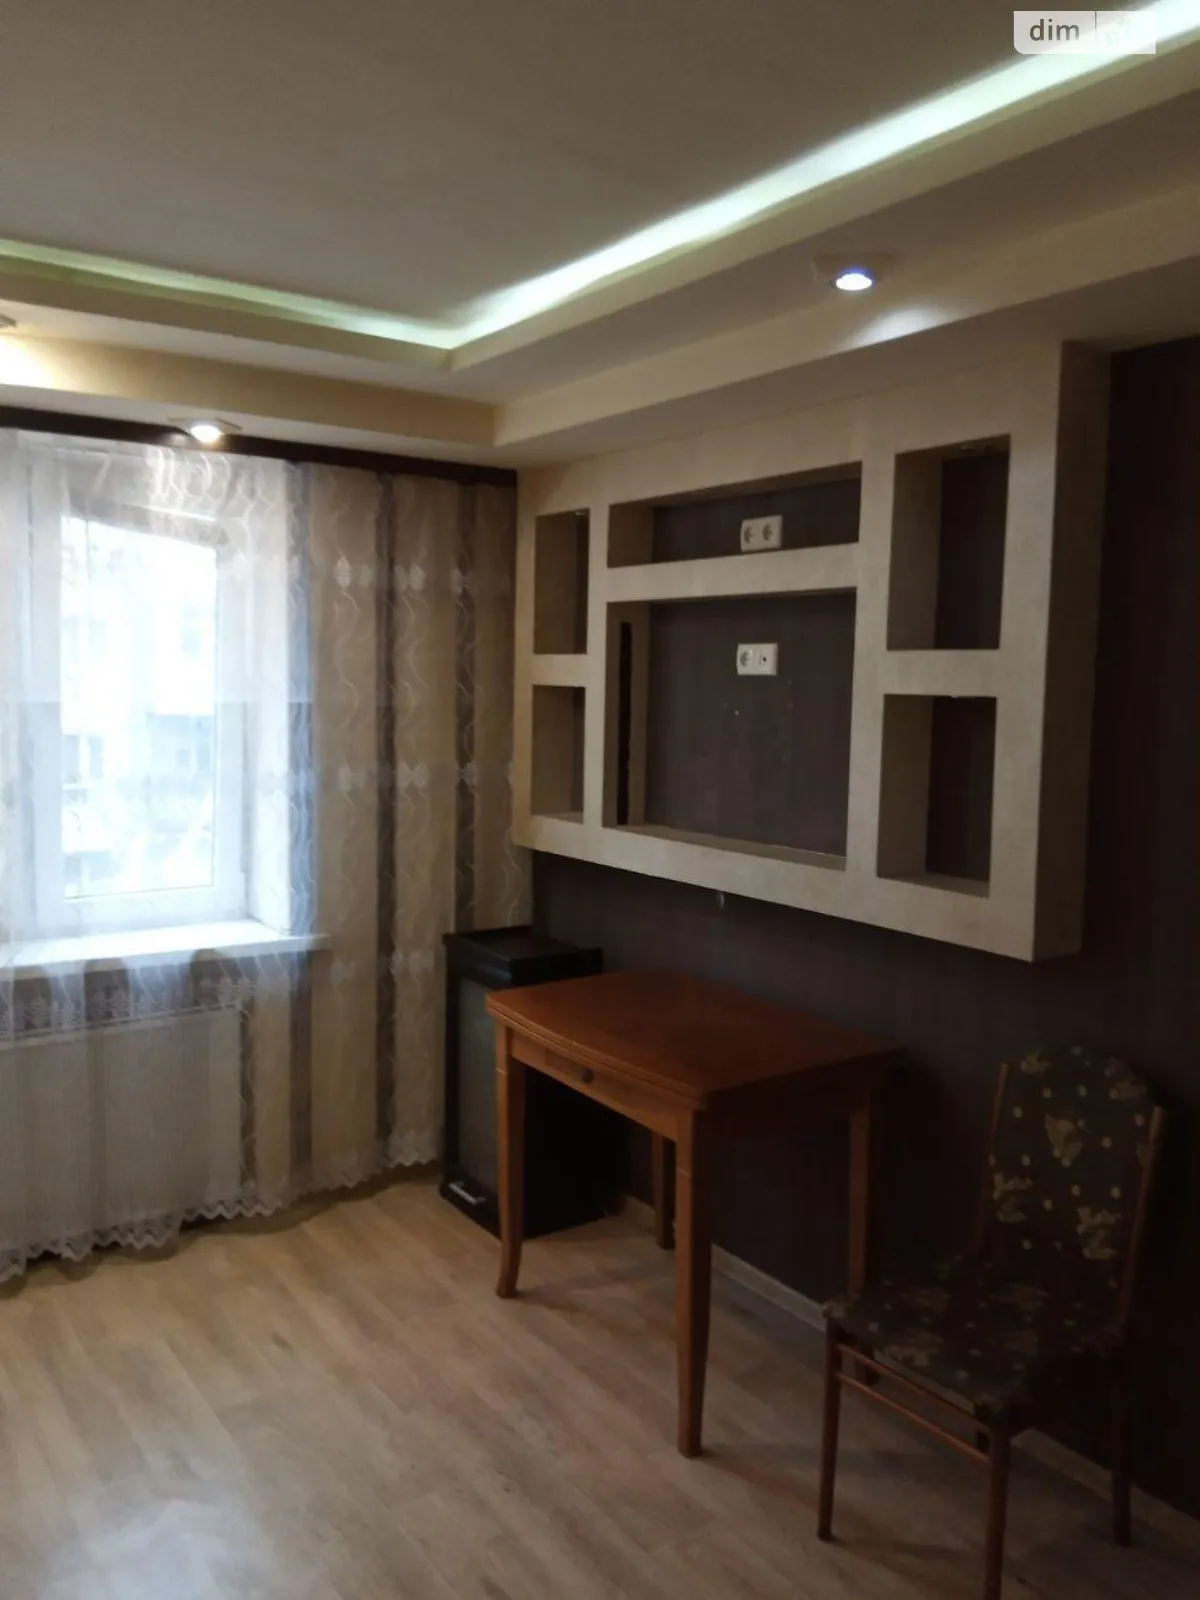 Продается комната 25 кв. м в Харькове - фото 3